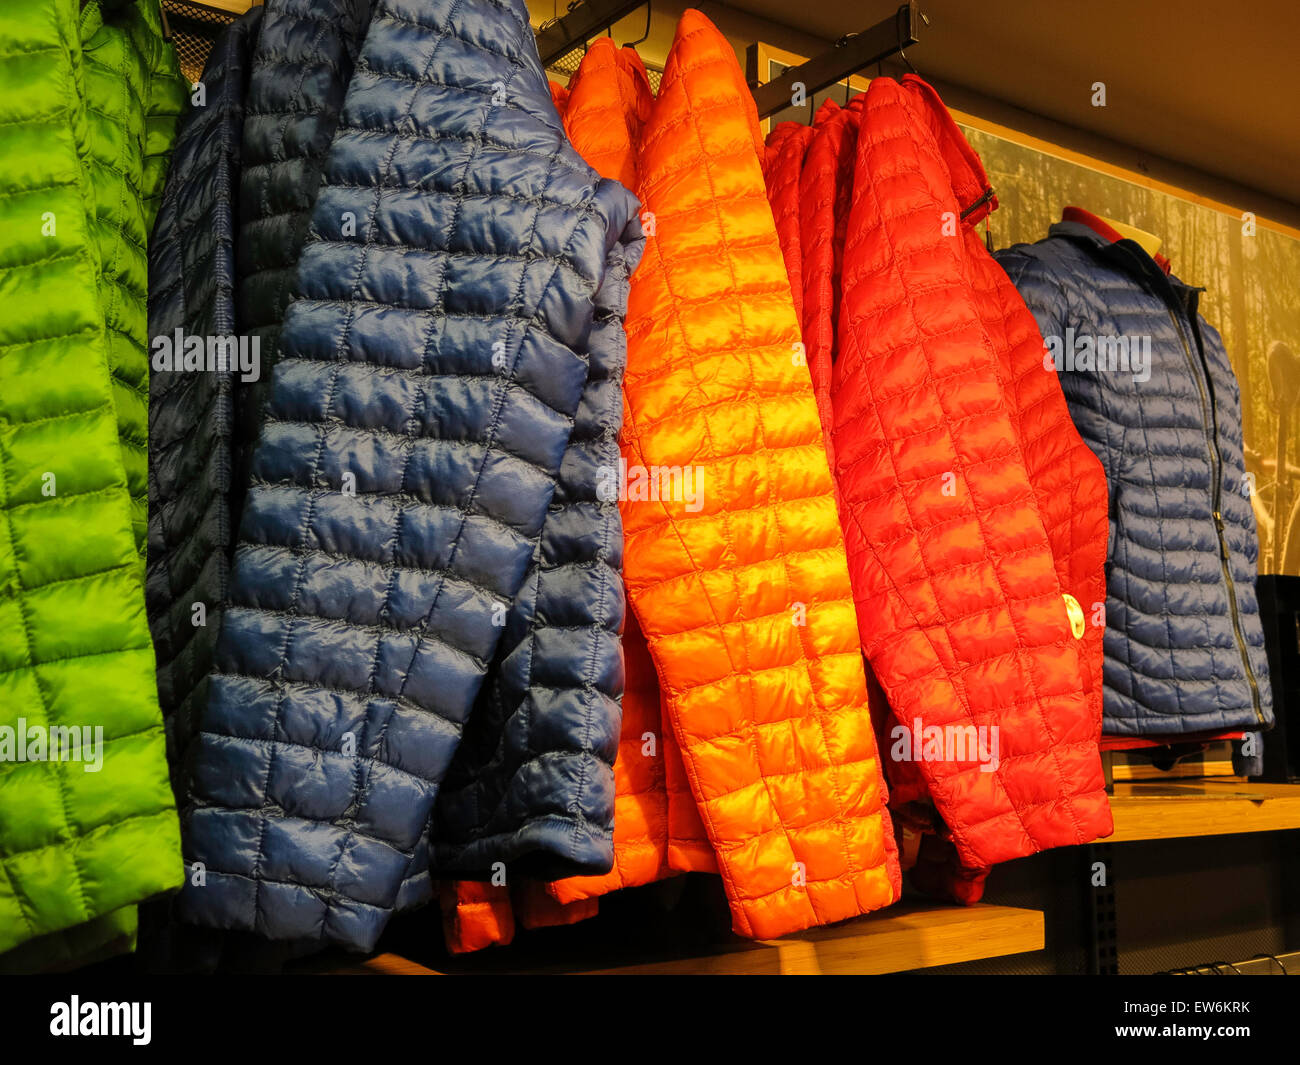 REI Sporting Goods Store, SoHo, NYC Stock Photo - Alamy